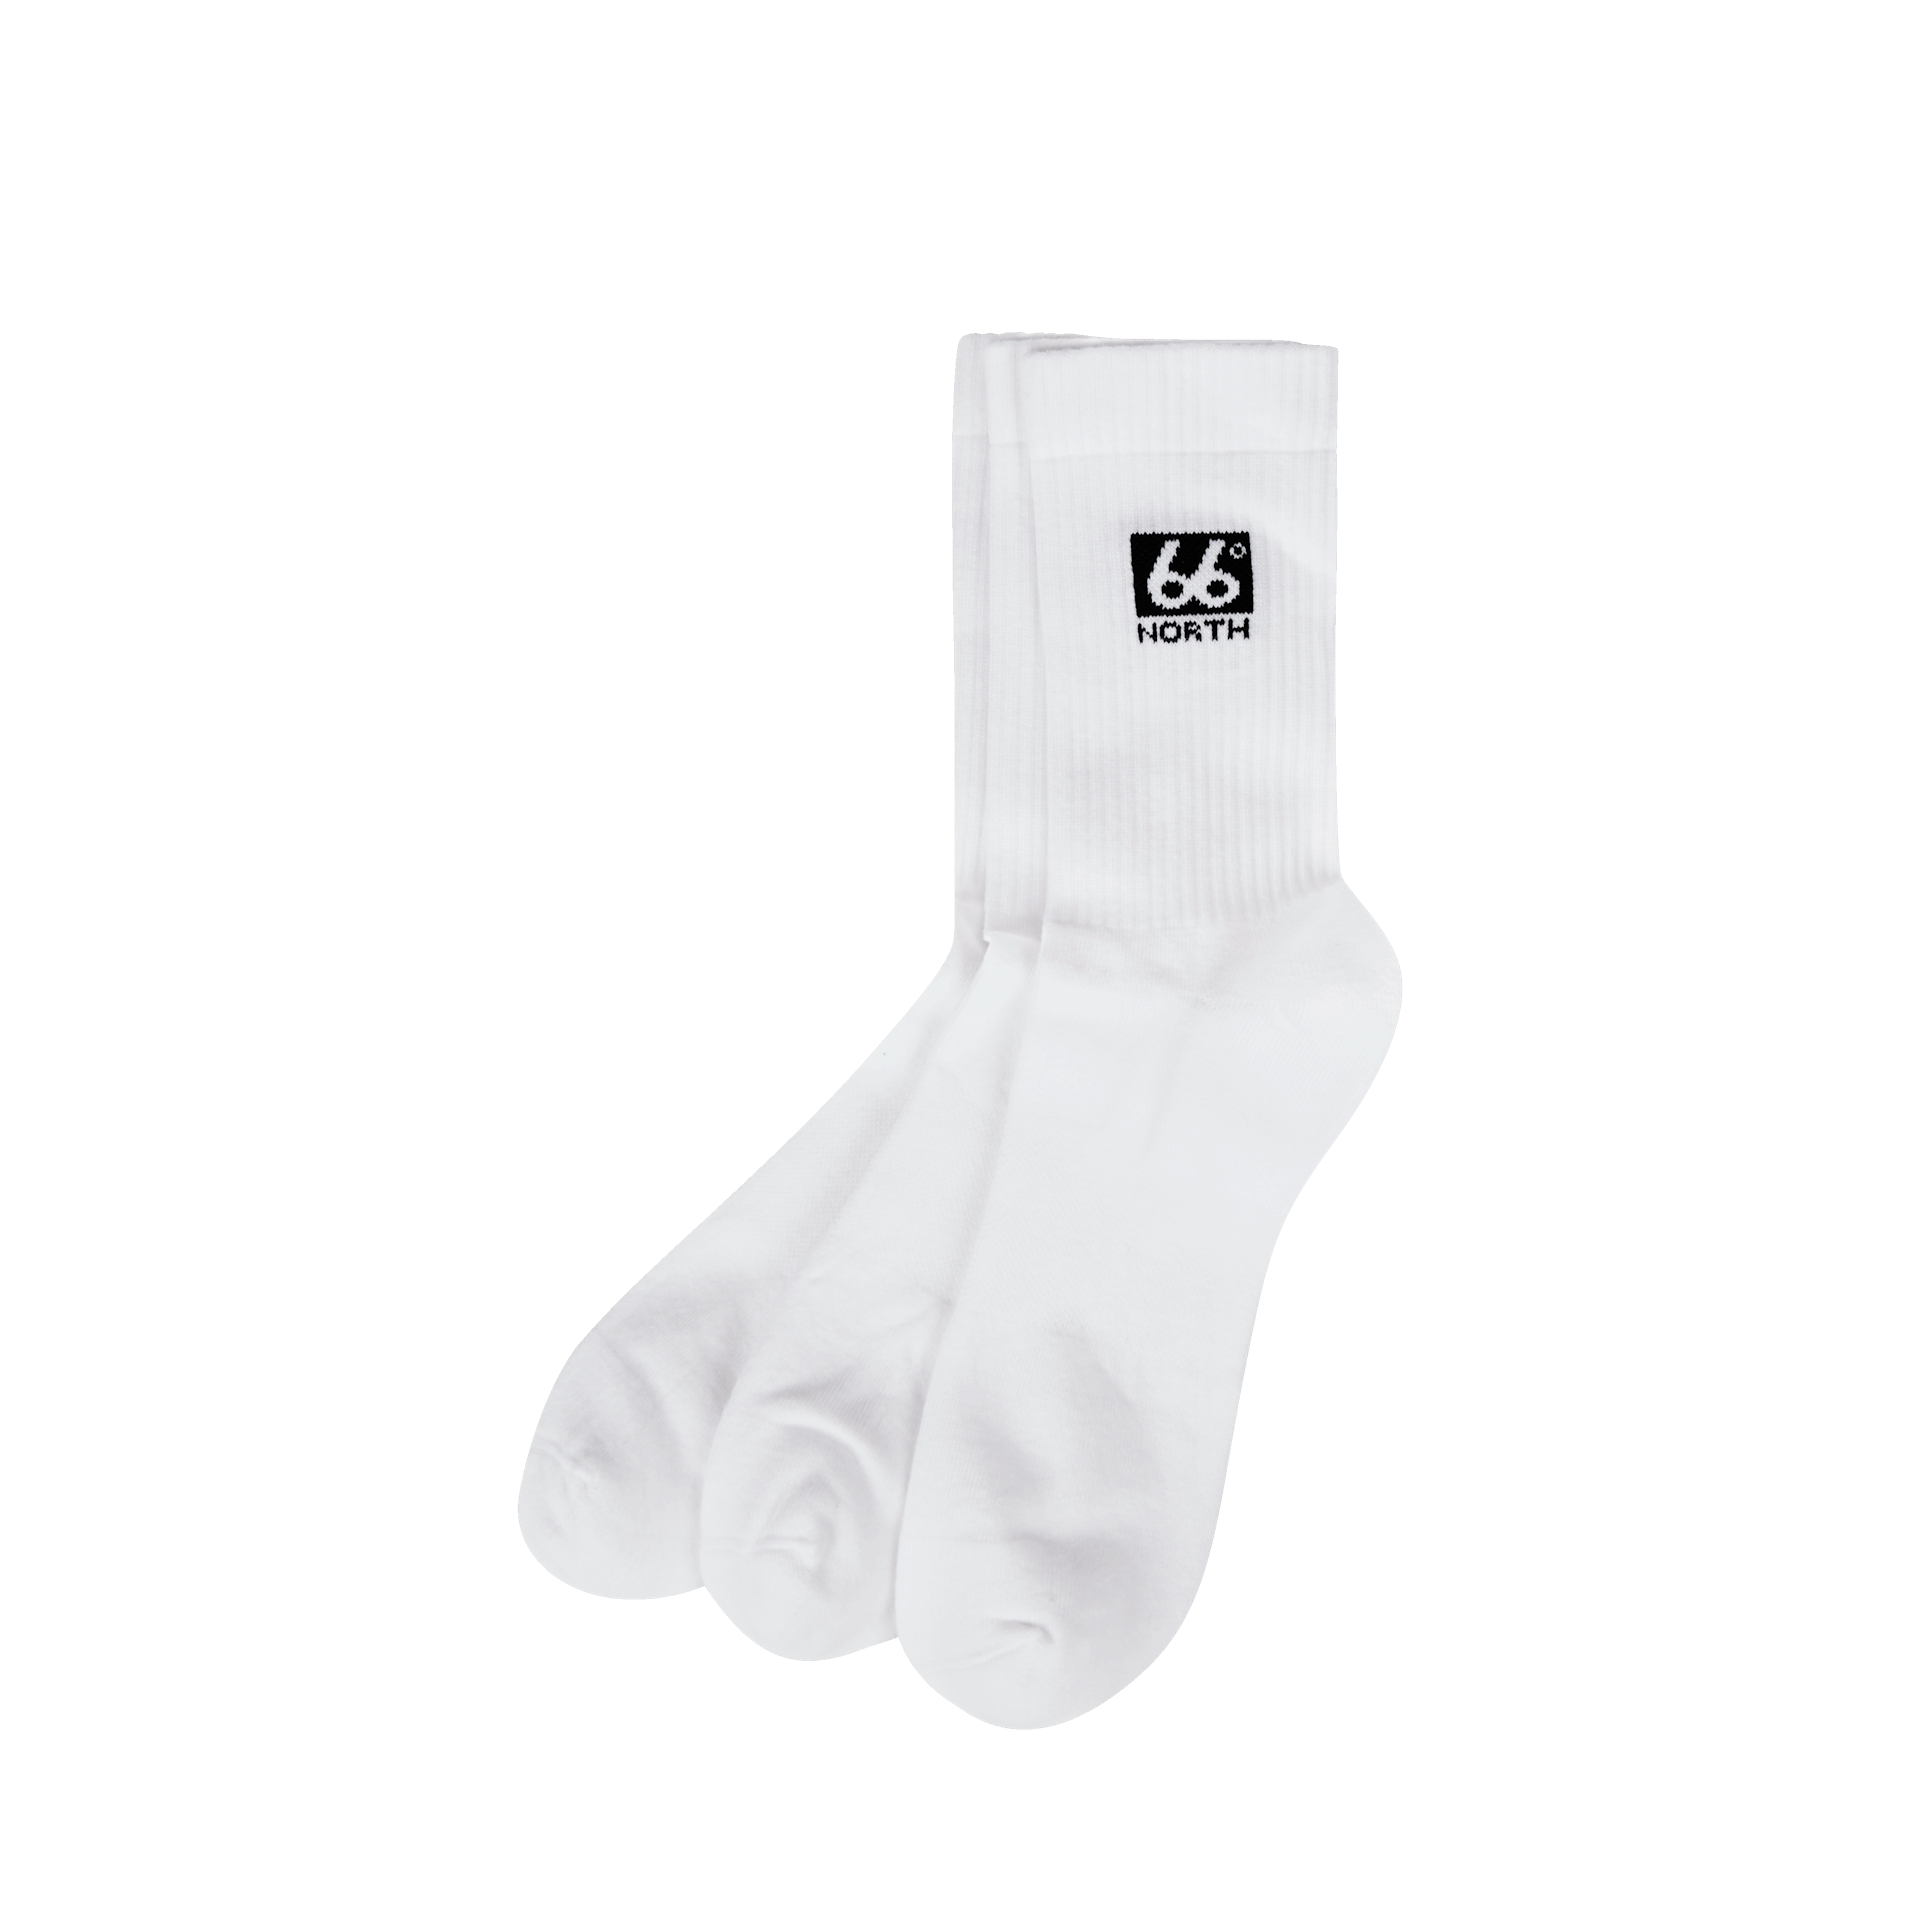 66°North 3-pack socks